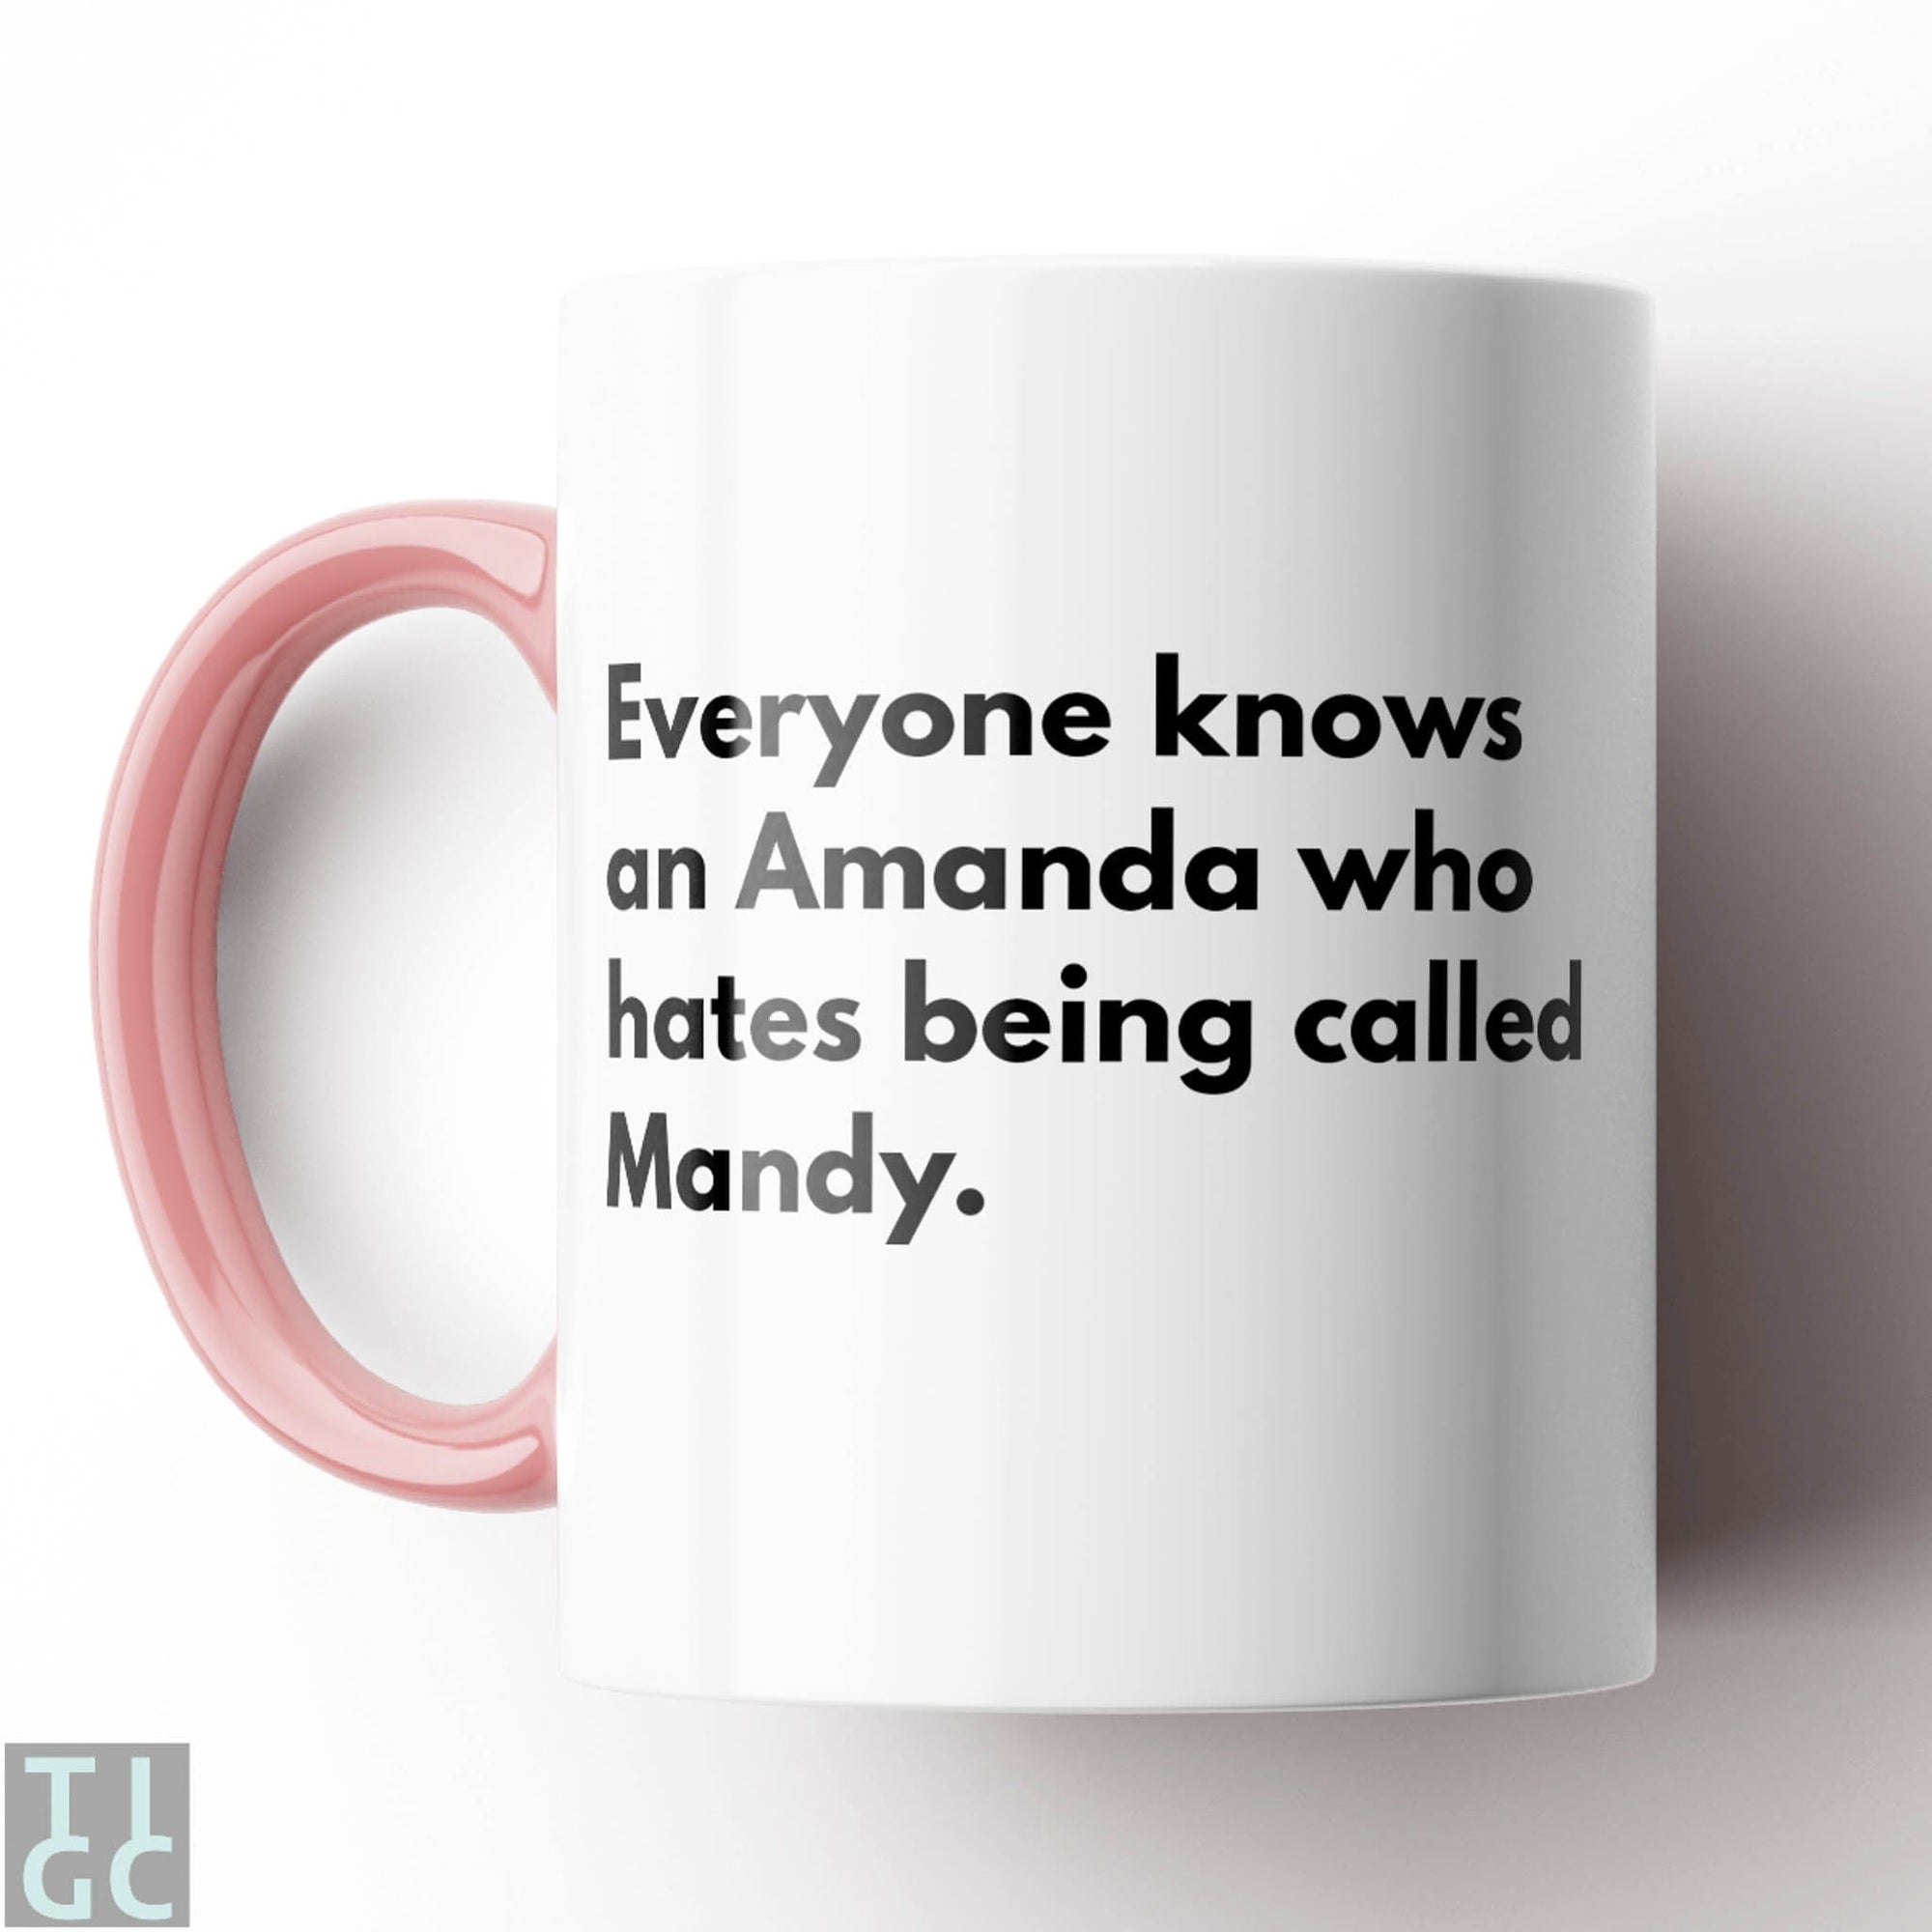 TIGC The Inappropriate Gift Co Everyone knows an Amanda mug